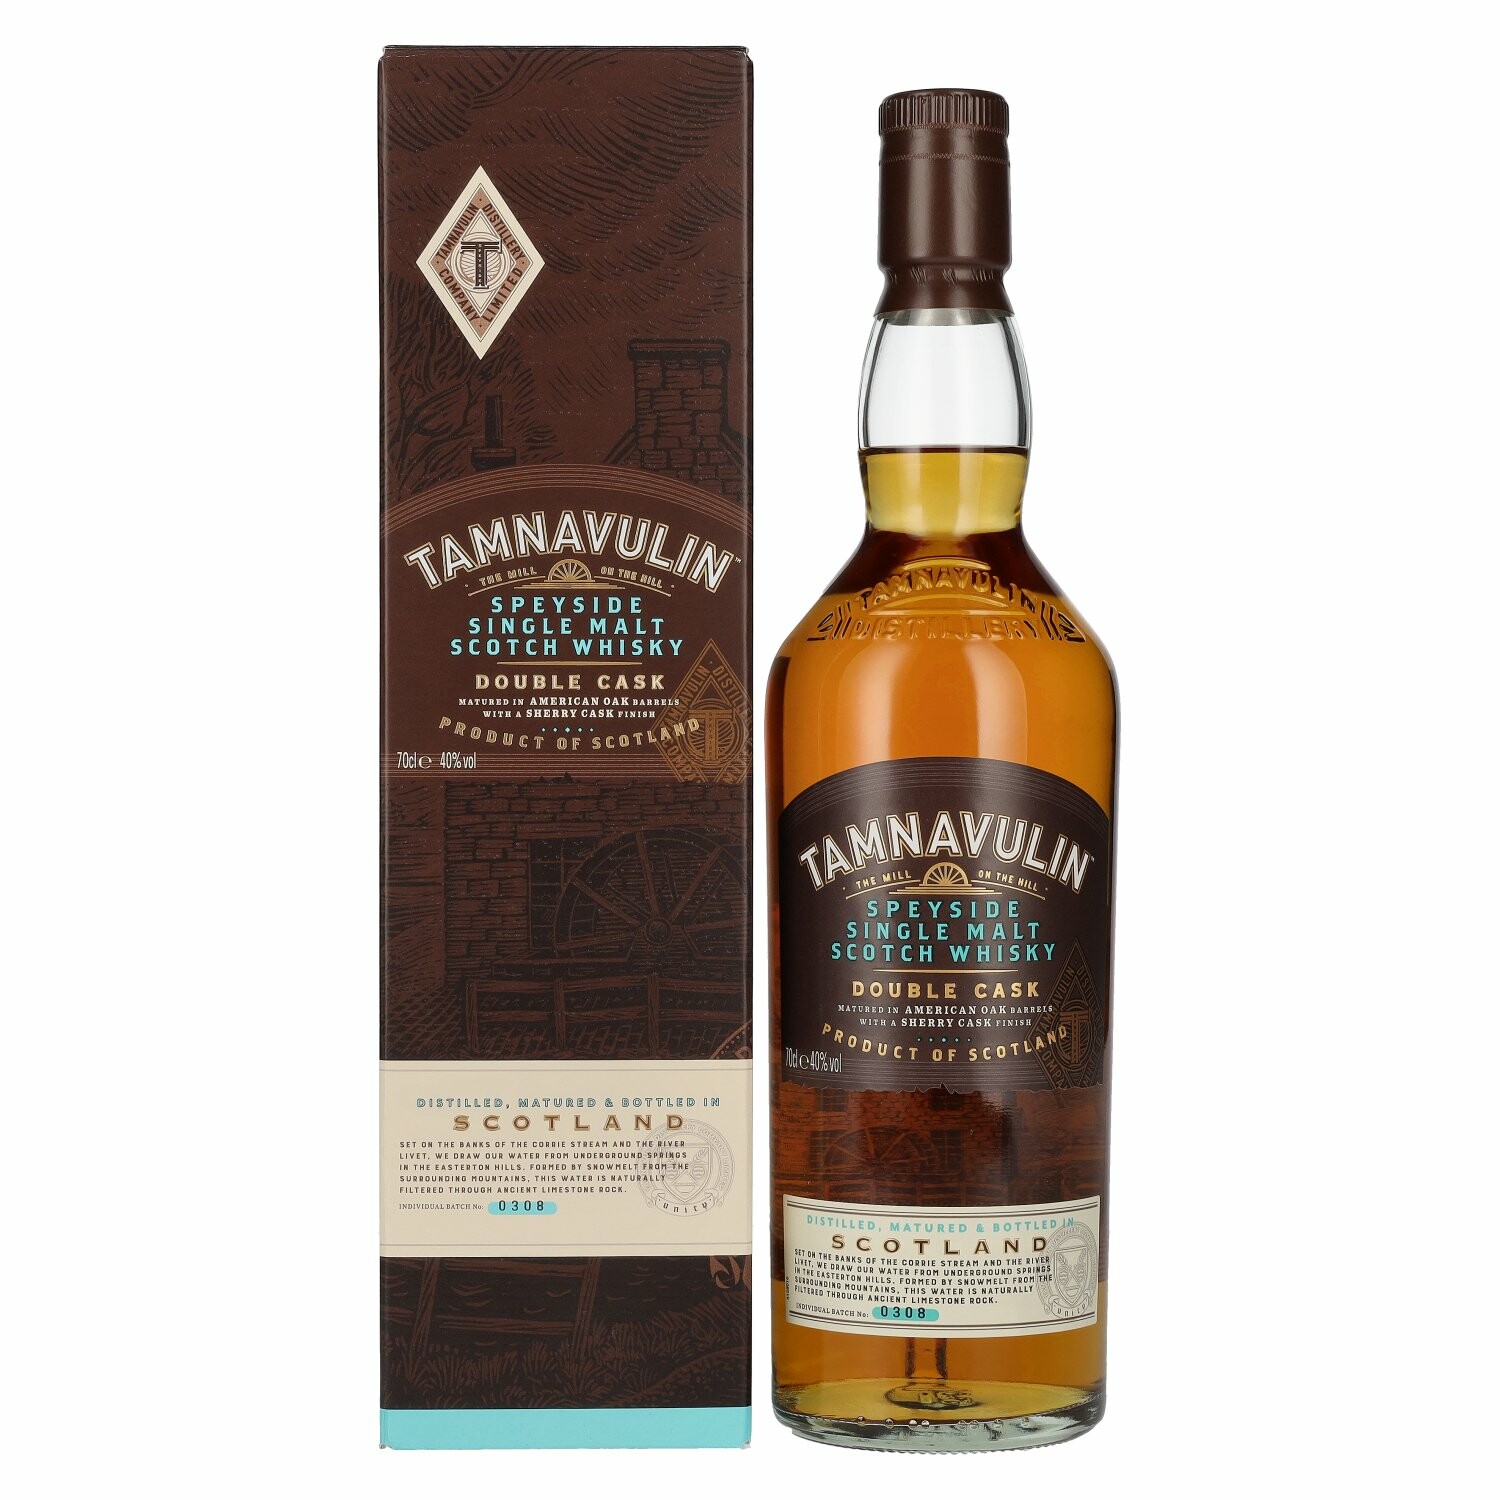 Tamnavulin DOUBLE CASK Speyside Single Malt Scotch Whisky 40% Vol. 0,7l in Giftbox